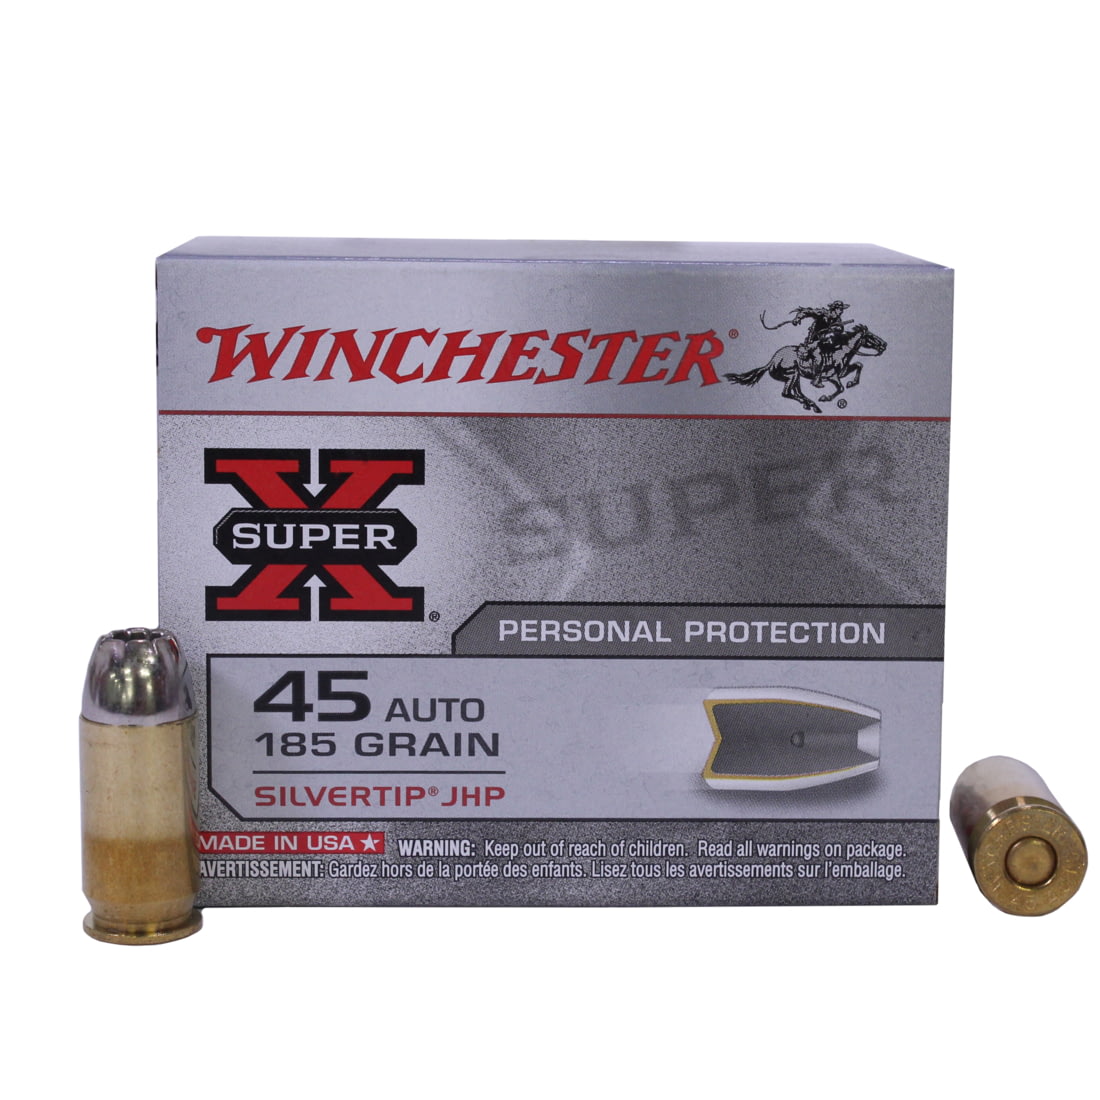 Winchester SUPER-X HANDGUN .45 ACP 185 grain Silvertip Jacketed Hollow Point Brass Cased Centerfire Pistol Ammunition